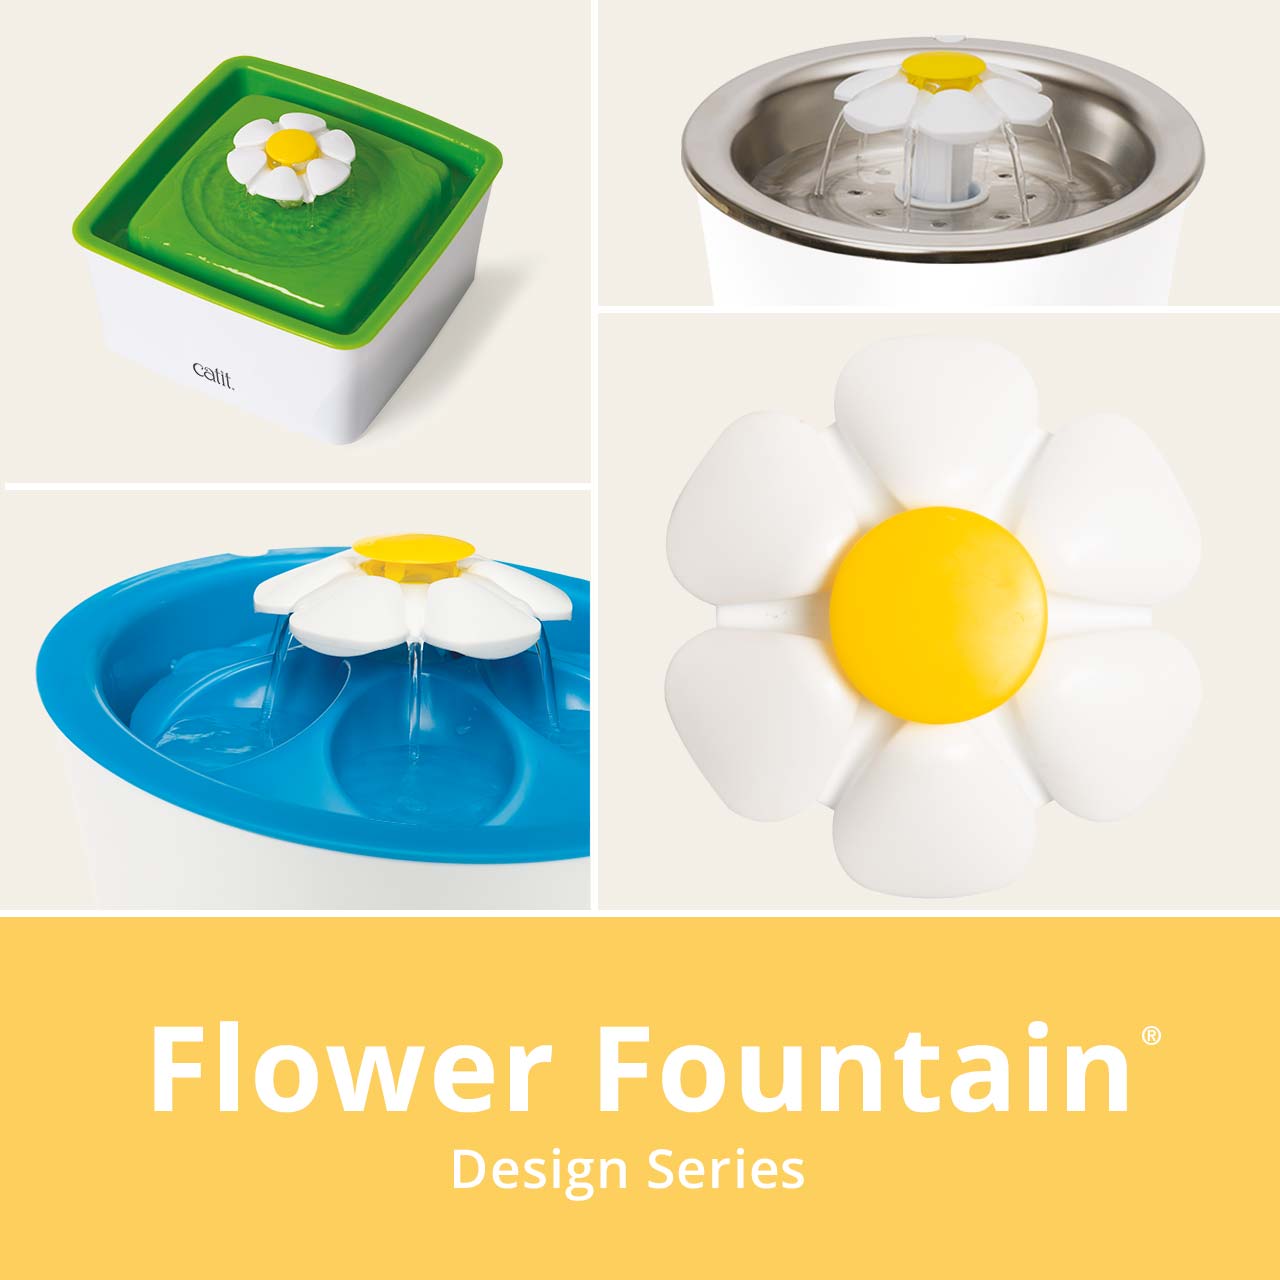 Catit Flower Fountain Design Series